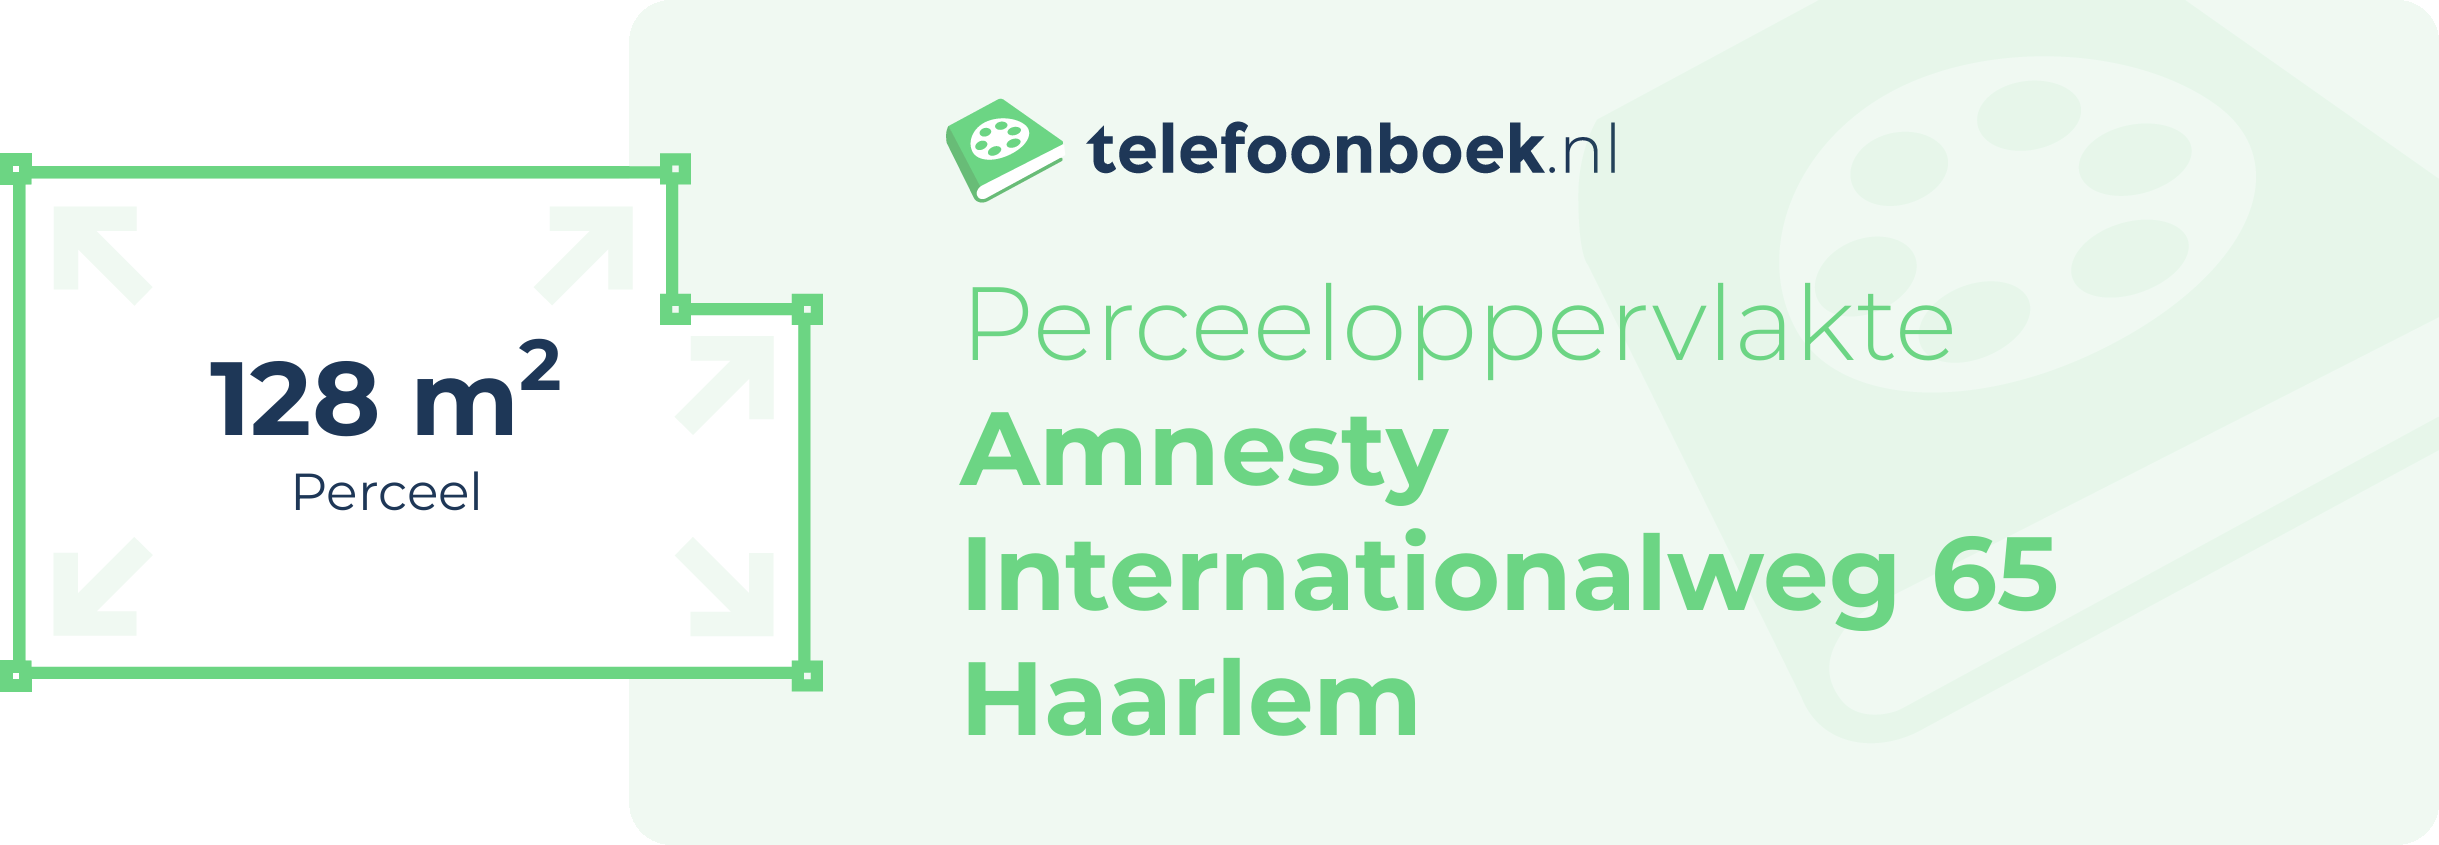 Perceeloppervlakte Amnesty Internationalweg 65 Haarlem